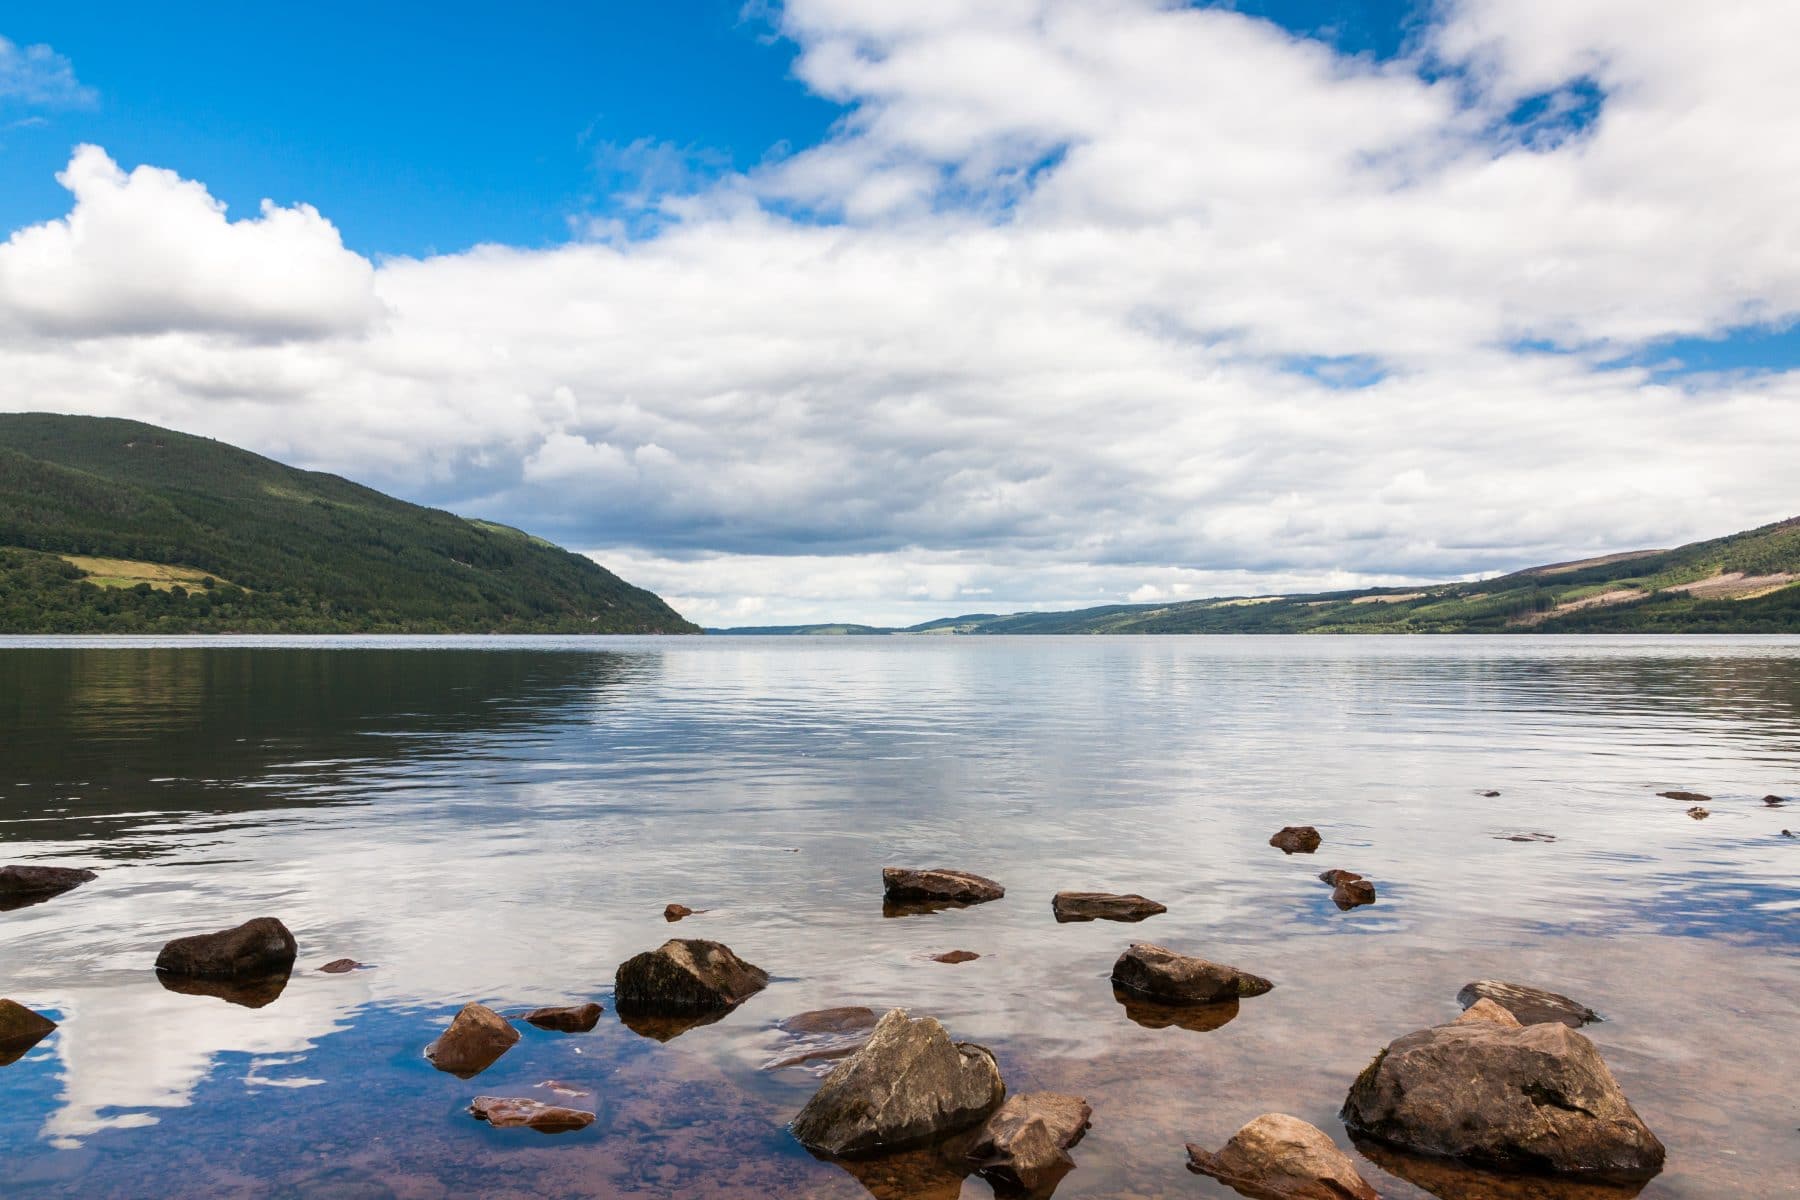 Loch Ness in the Scottish Highlands, Scotland